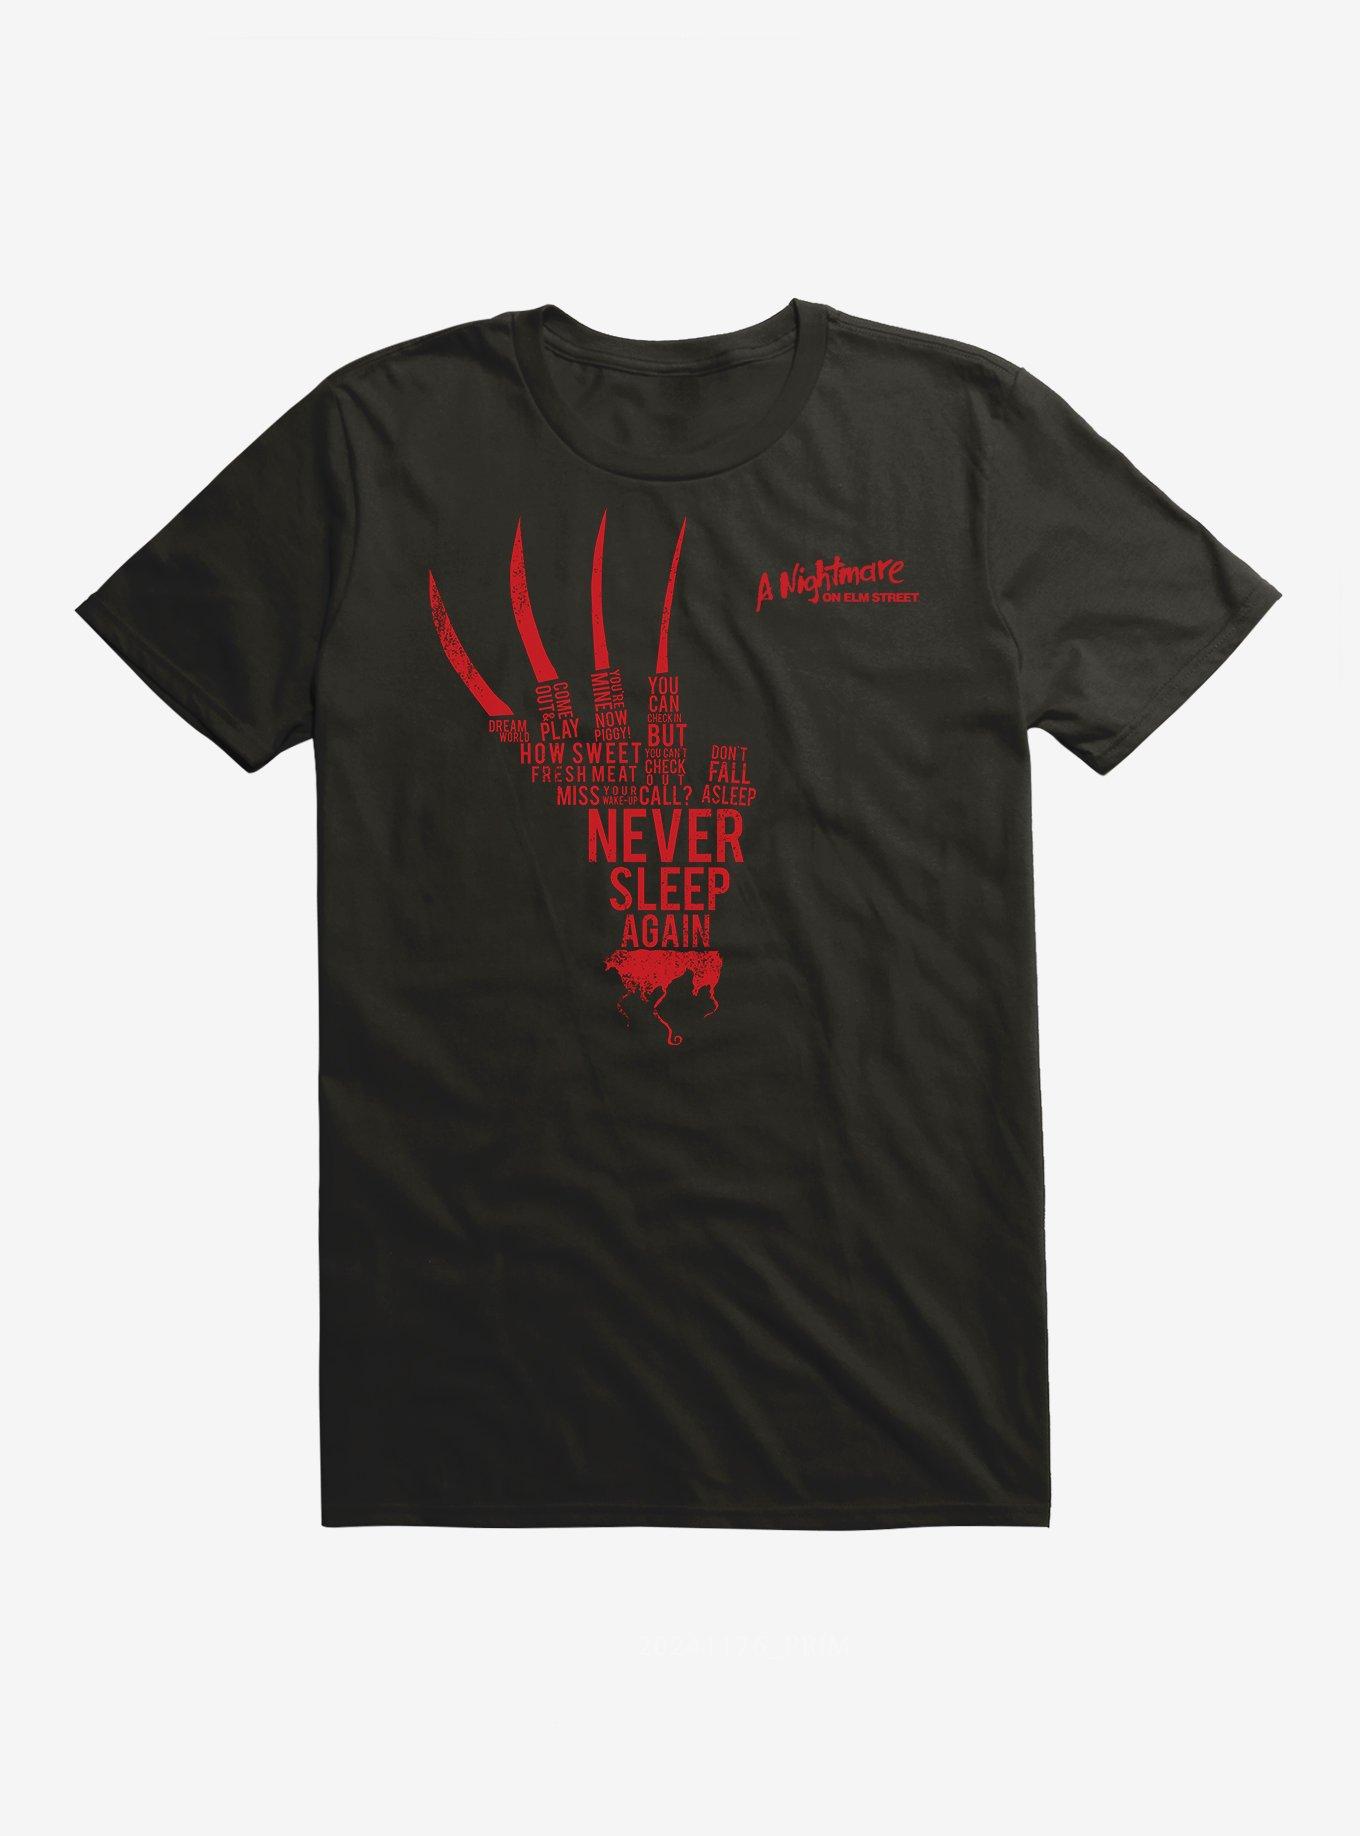 A Nightmare On Elm Street Never Sleep Again Freddy Word Collage T-Shirt